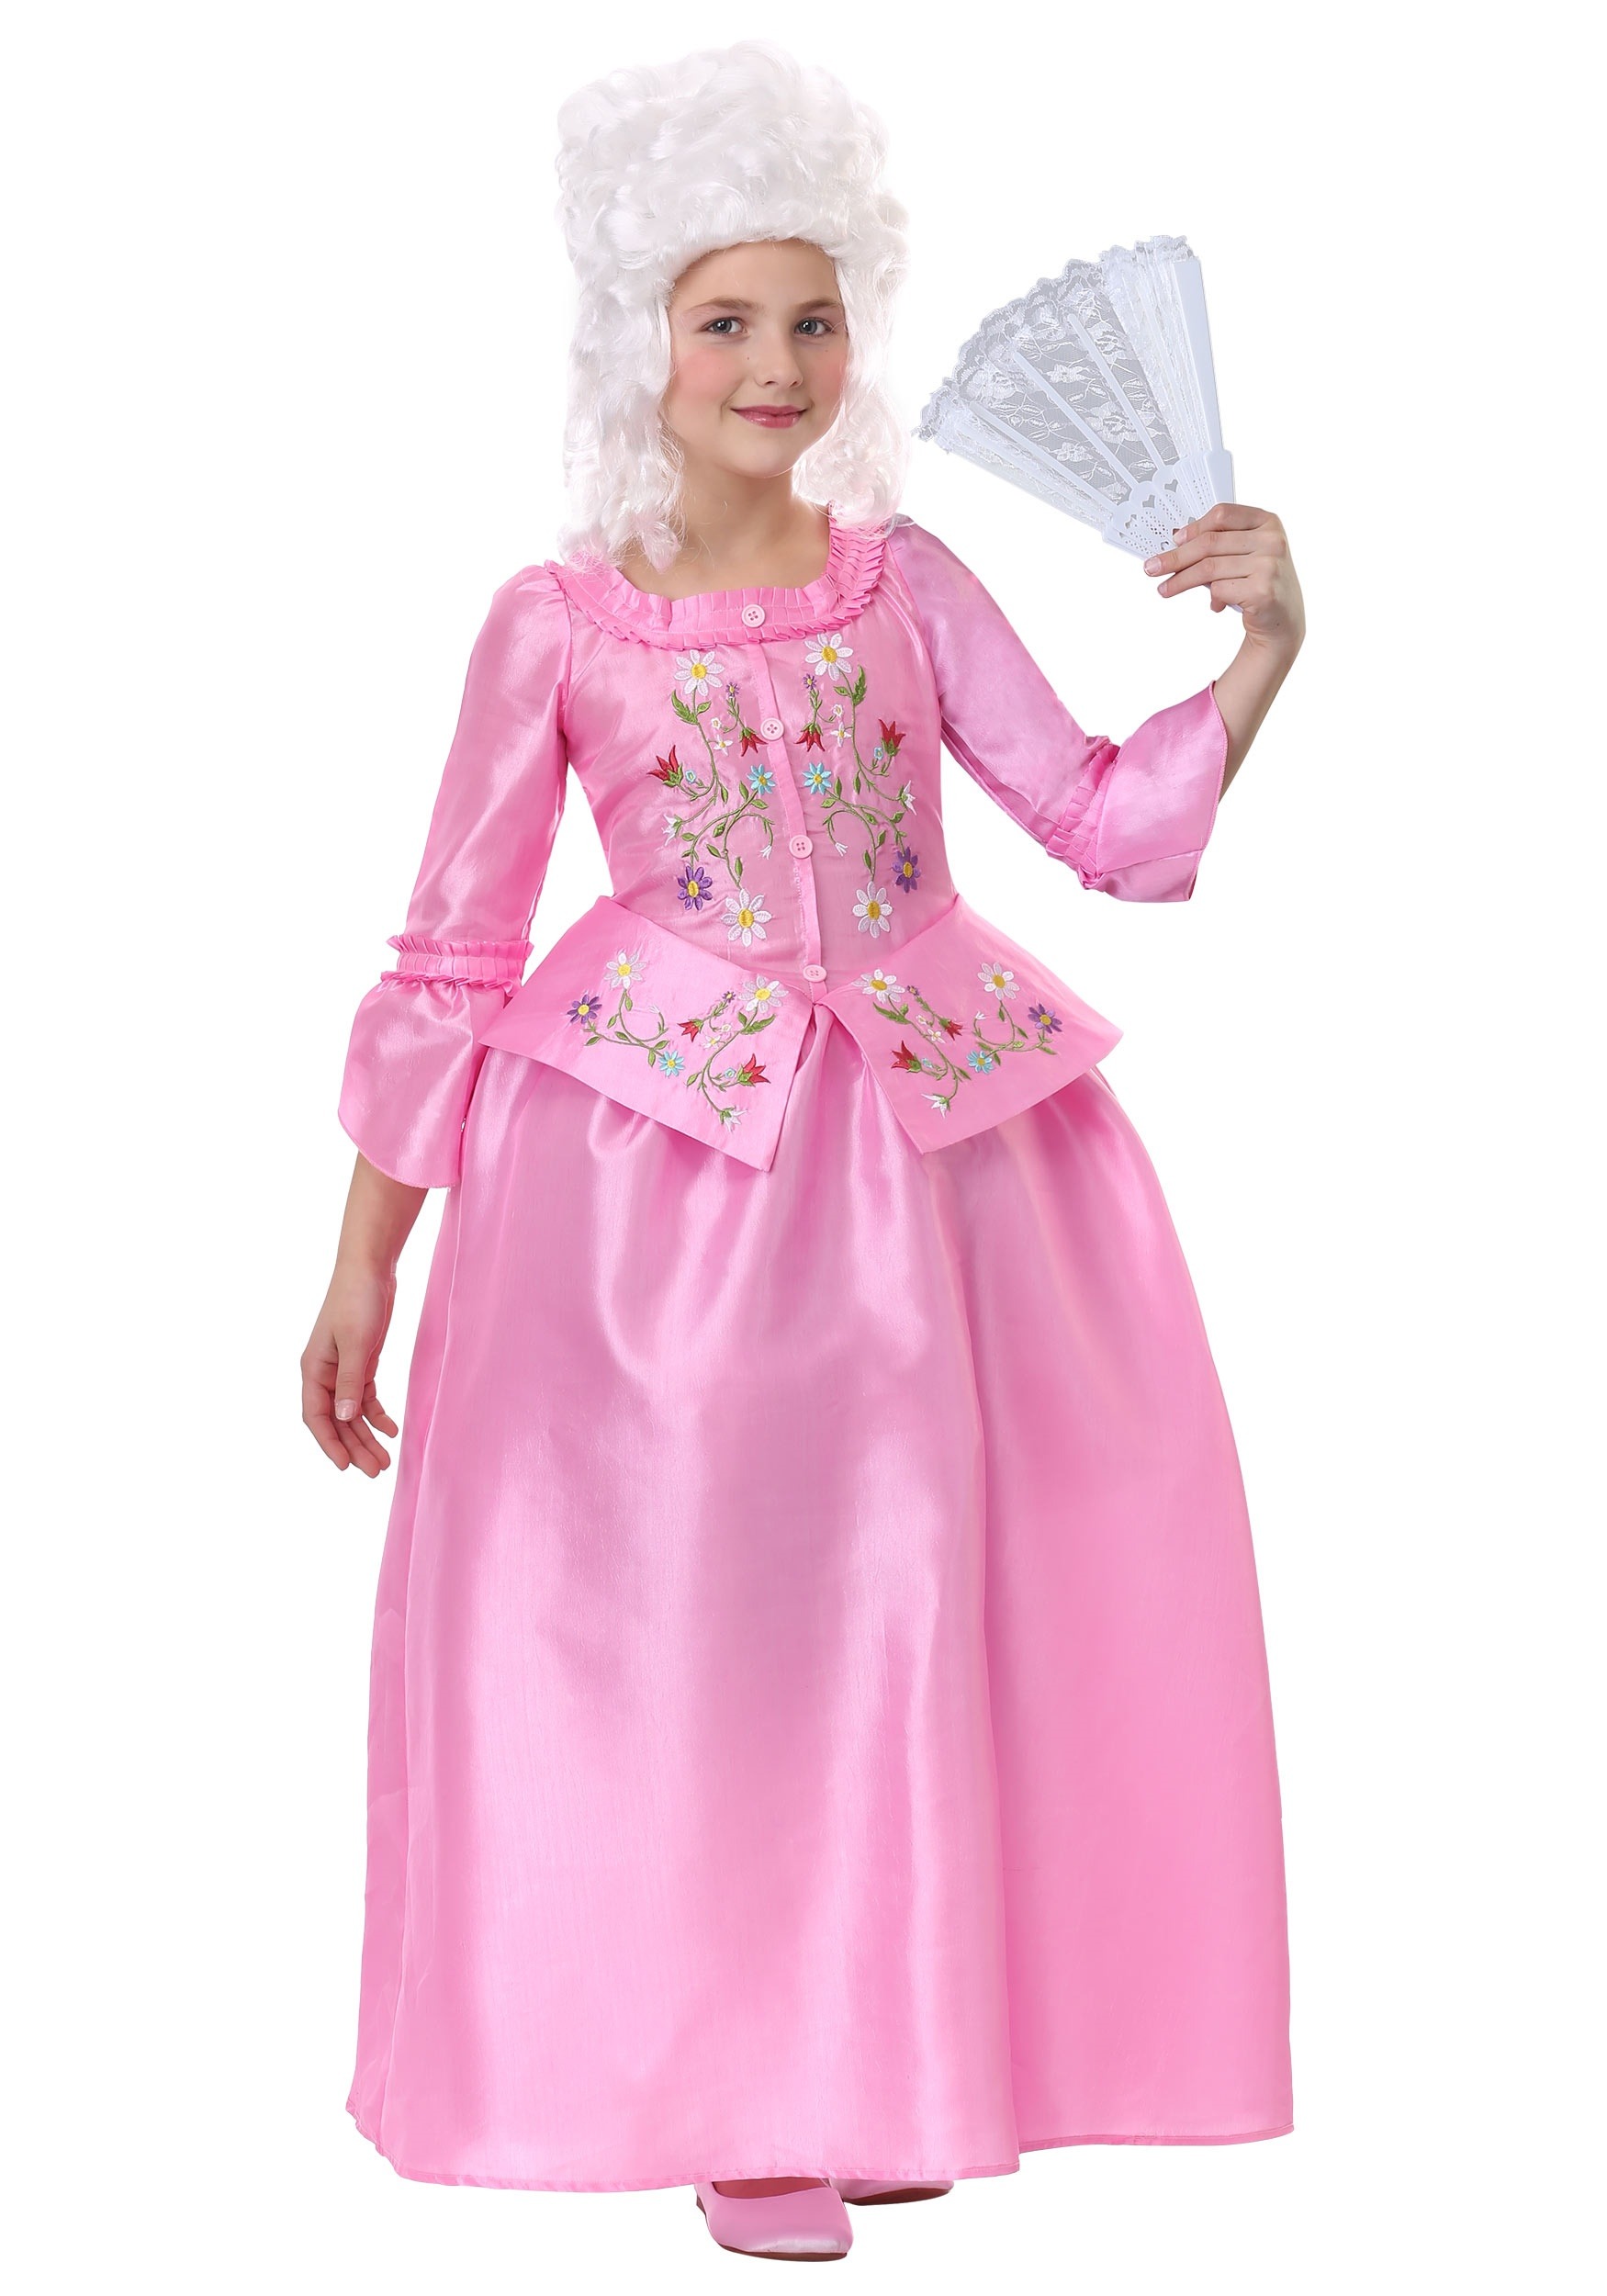 Marie Antoinette Costume Adult Halloween Fancy Dress 